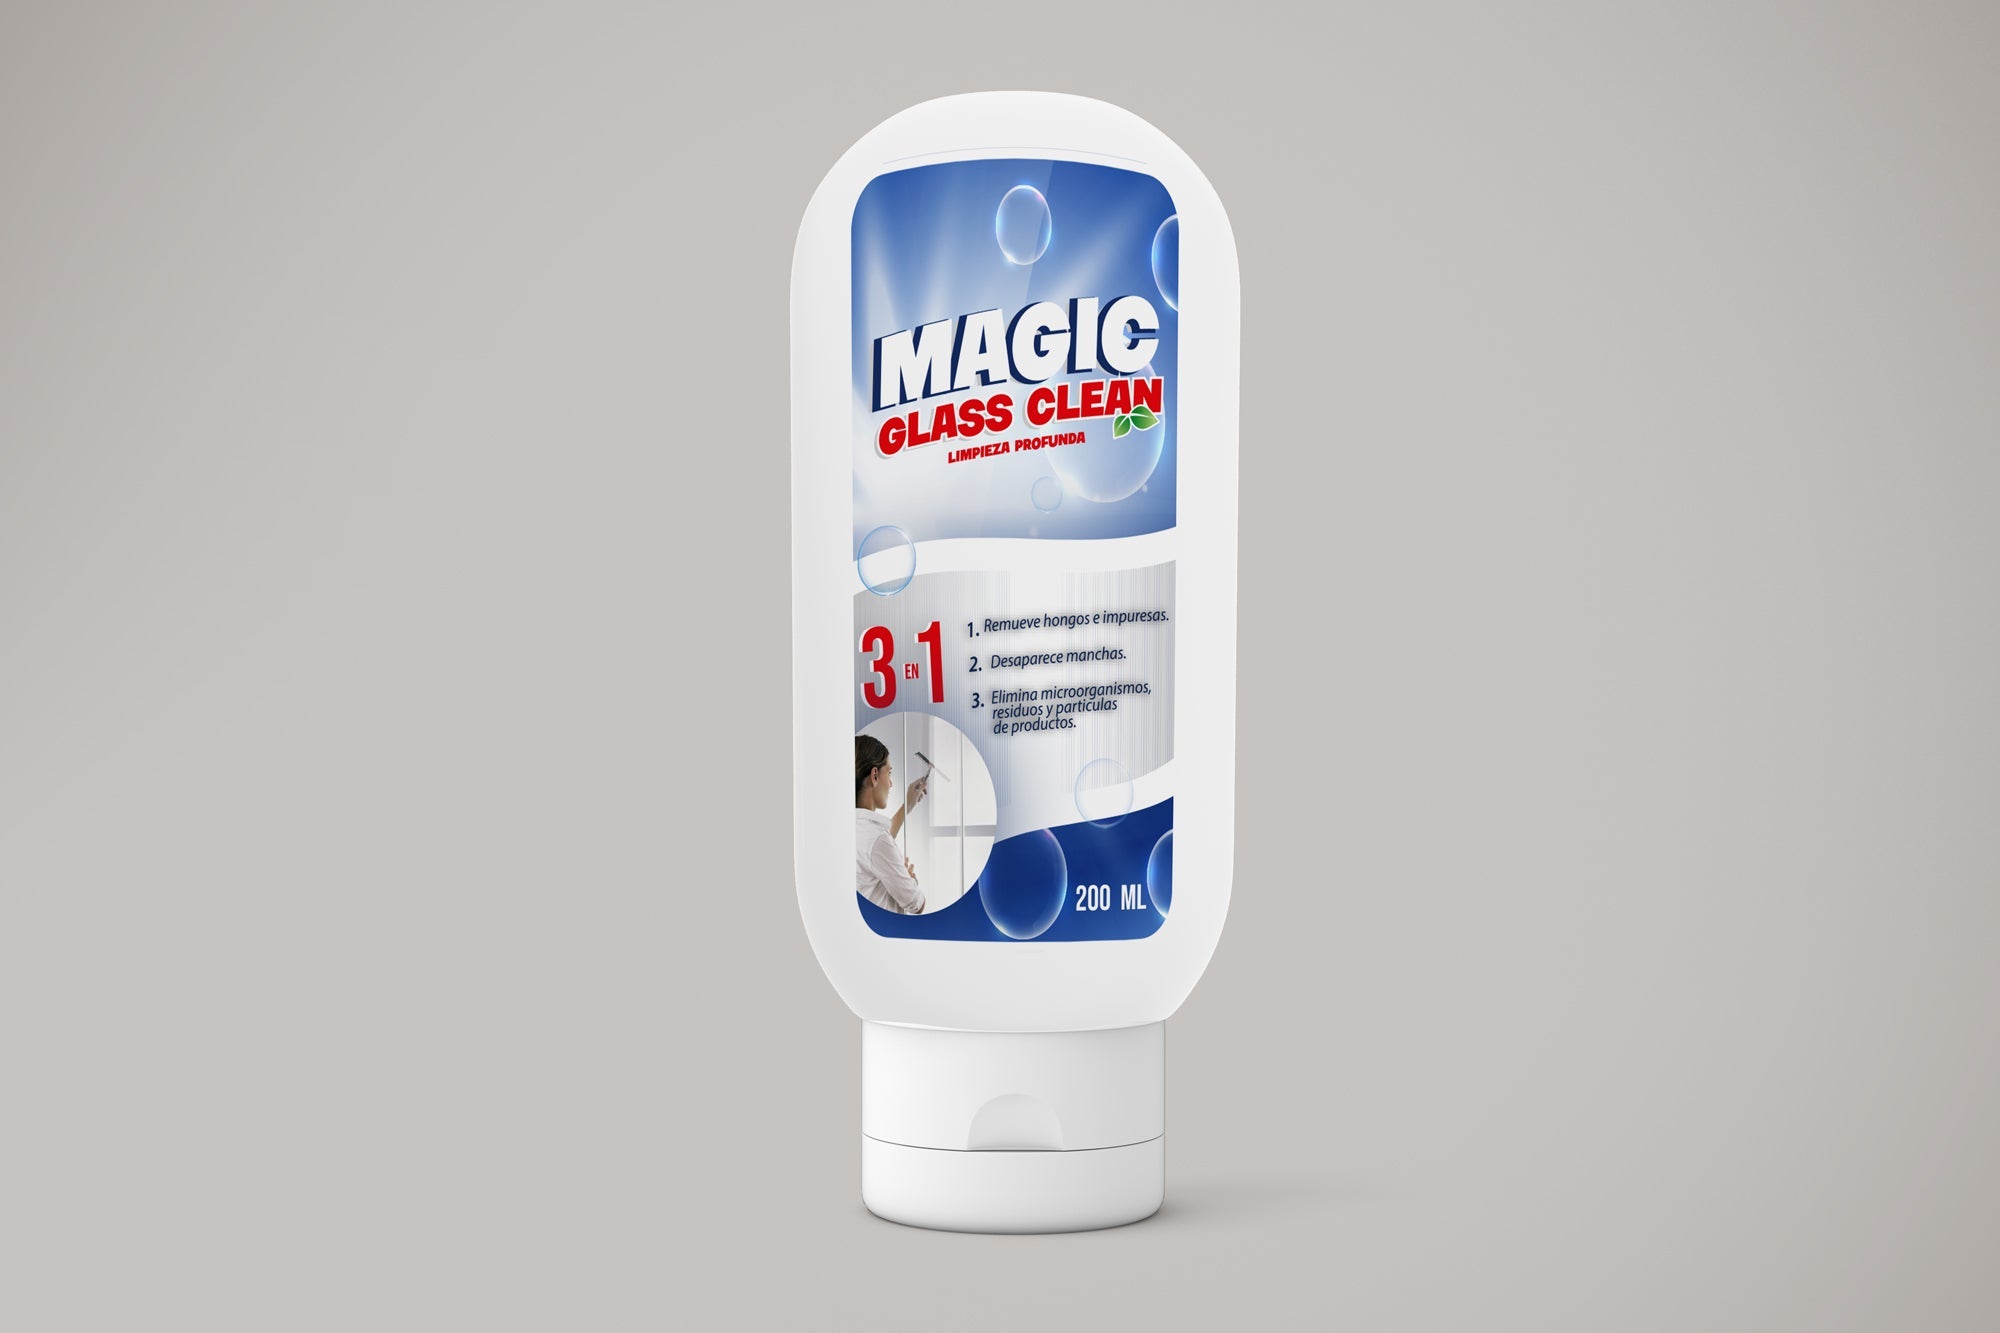 1pcs/3pcs magic rag magic wipe glass without leaving trace